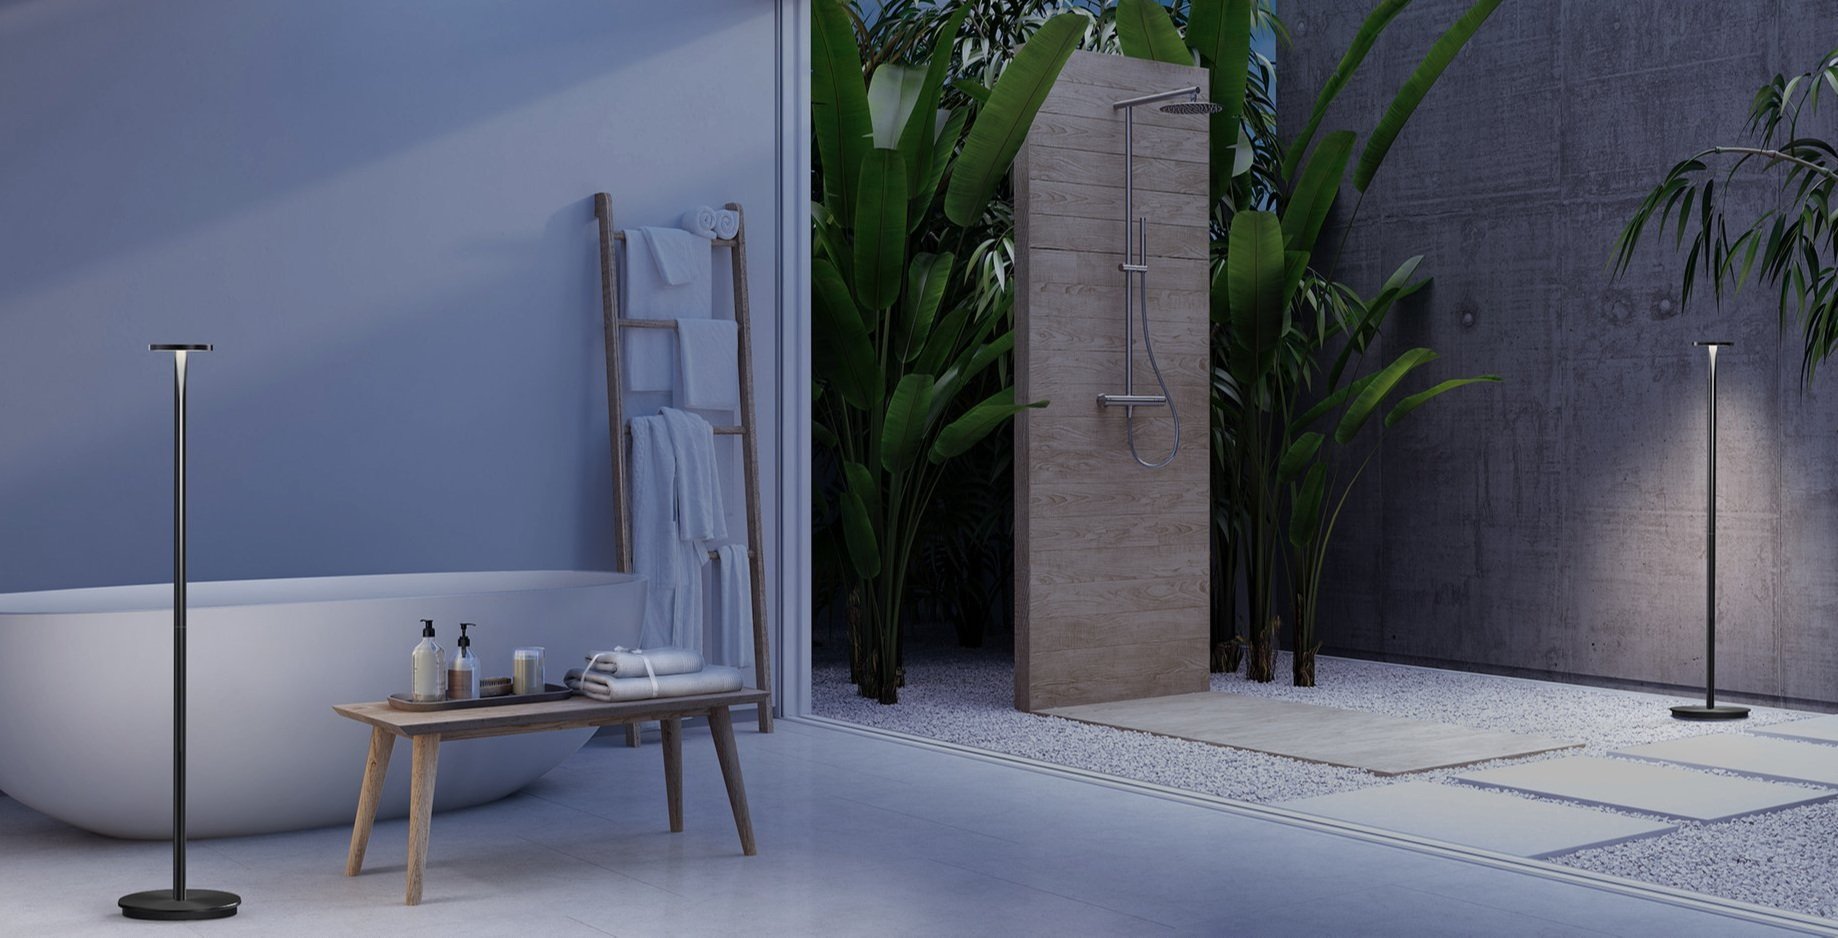 Pablo+Designs+-+Luci+Floor+-+Environmental+Image+-+Black+-+Bath+Tub_300.jpg